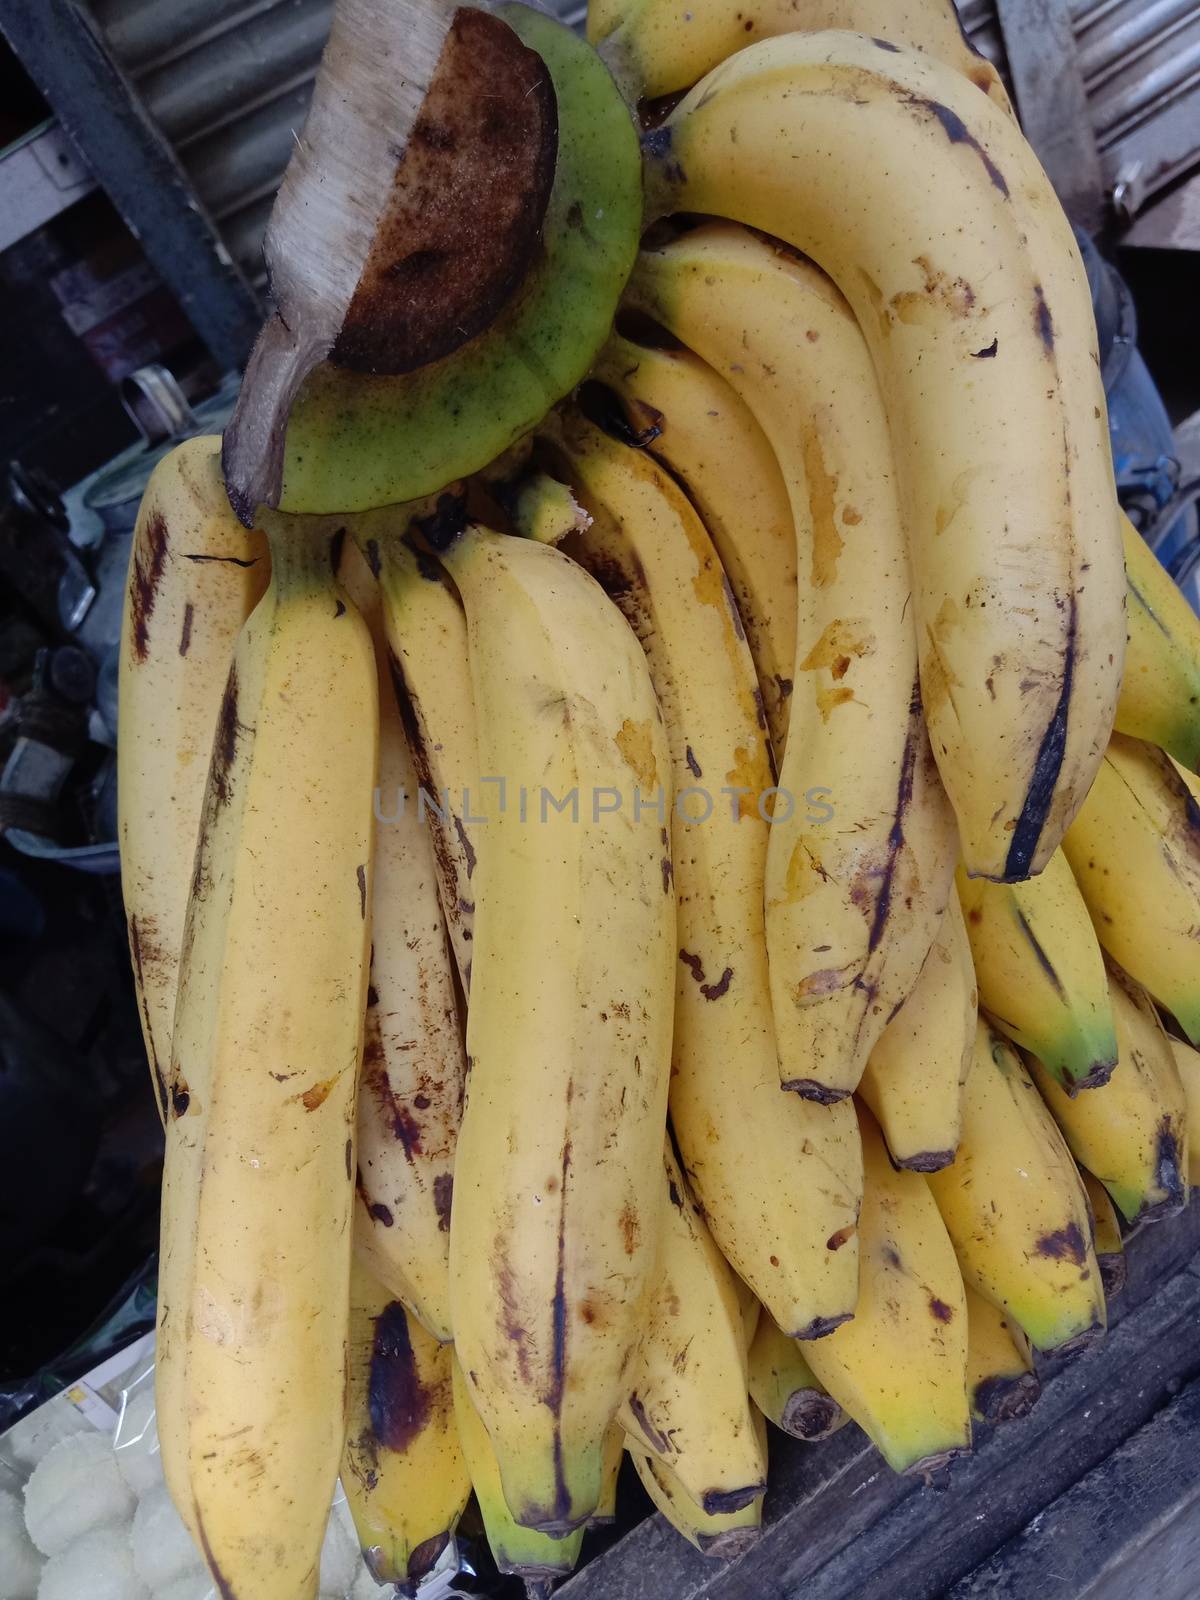 tasty and healthy banana bounce on shop